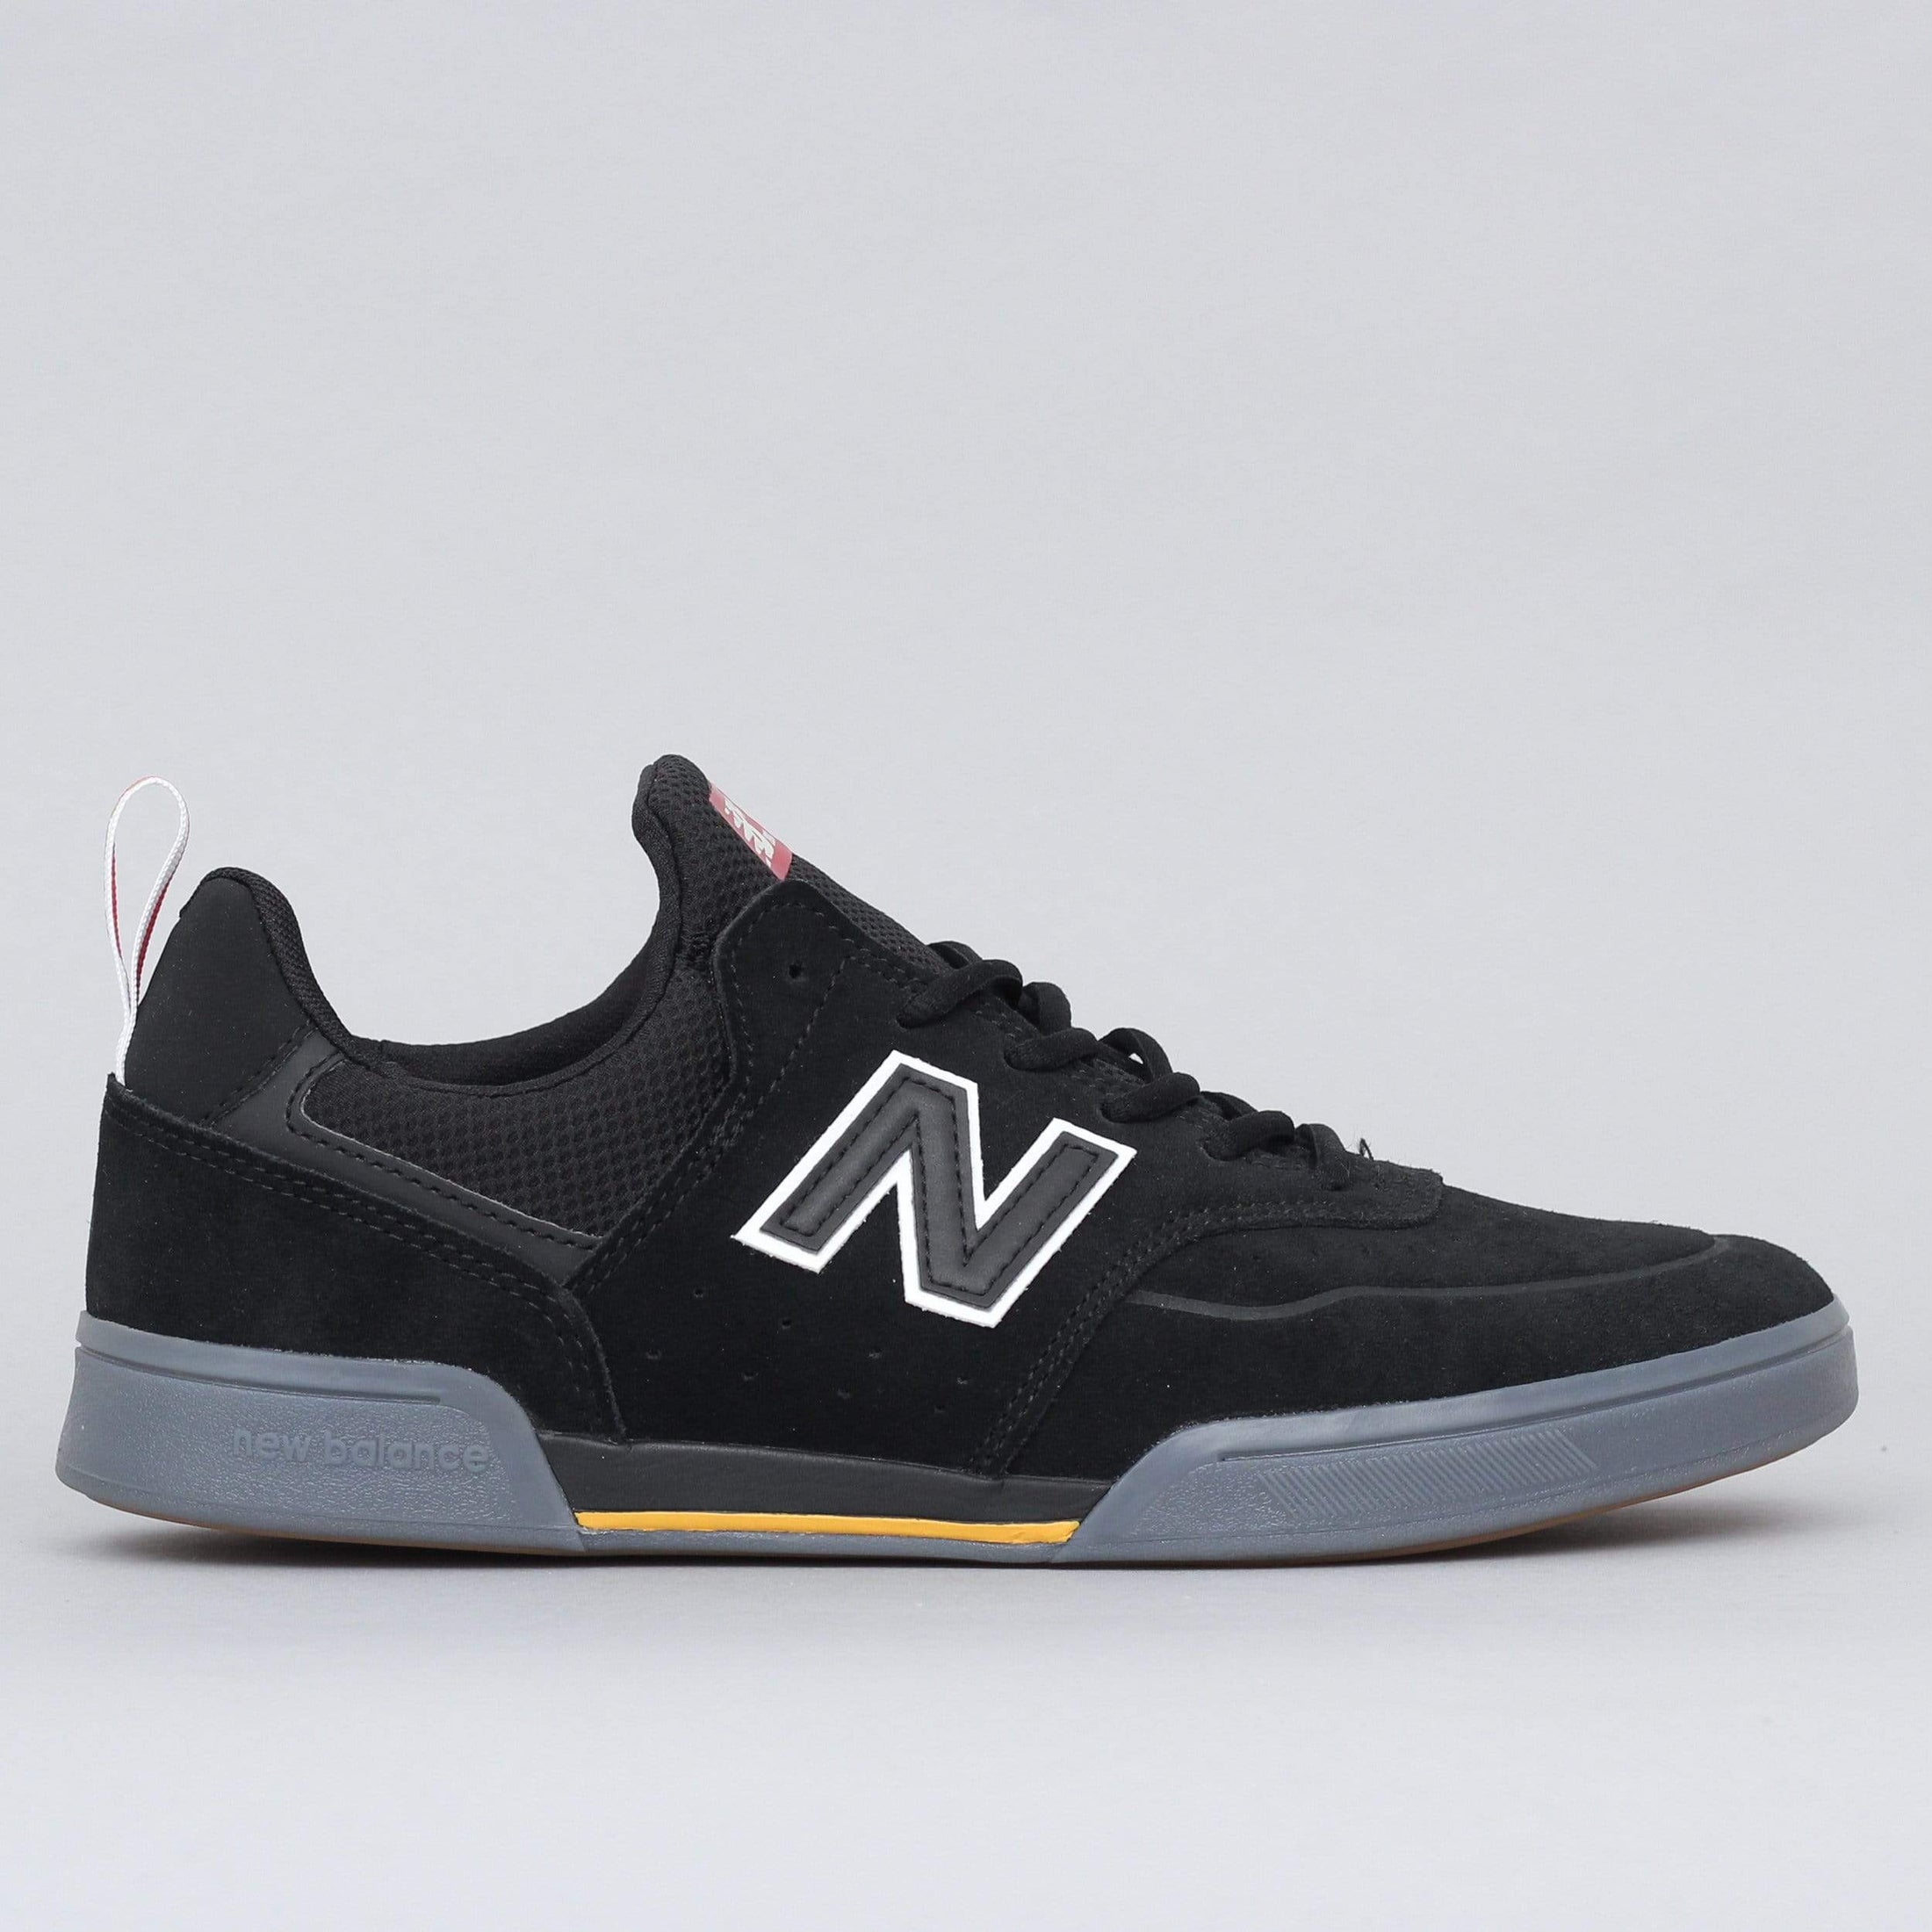 New Balance 288 Jack Curtin Shoes Black / Grey